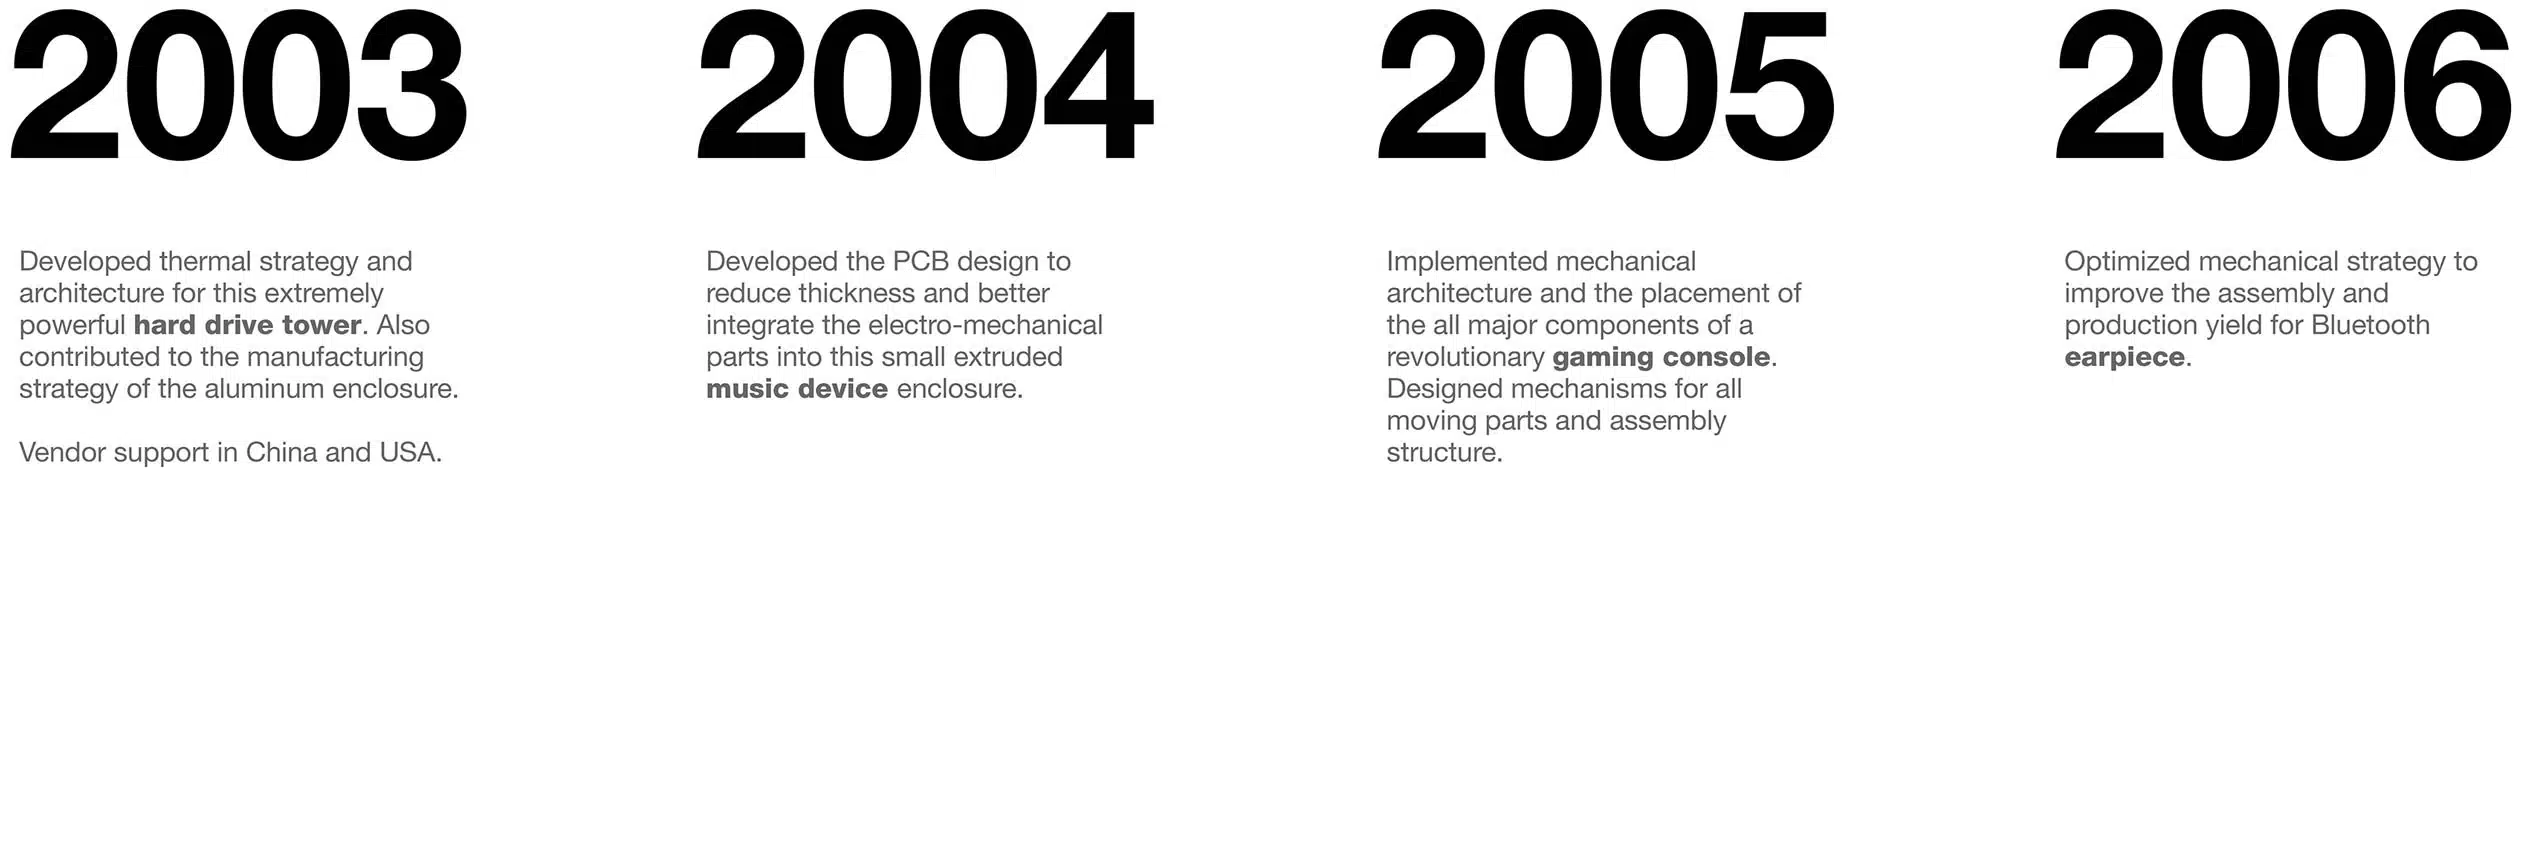 Surfaceink Timeline 2003-2006